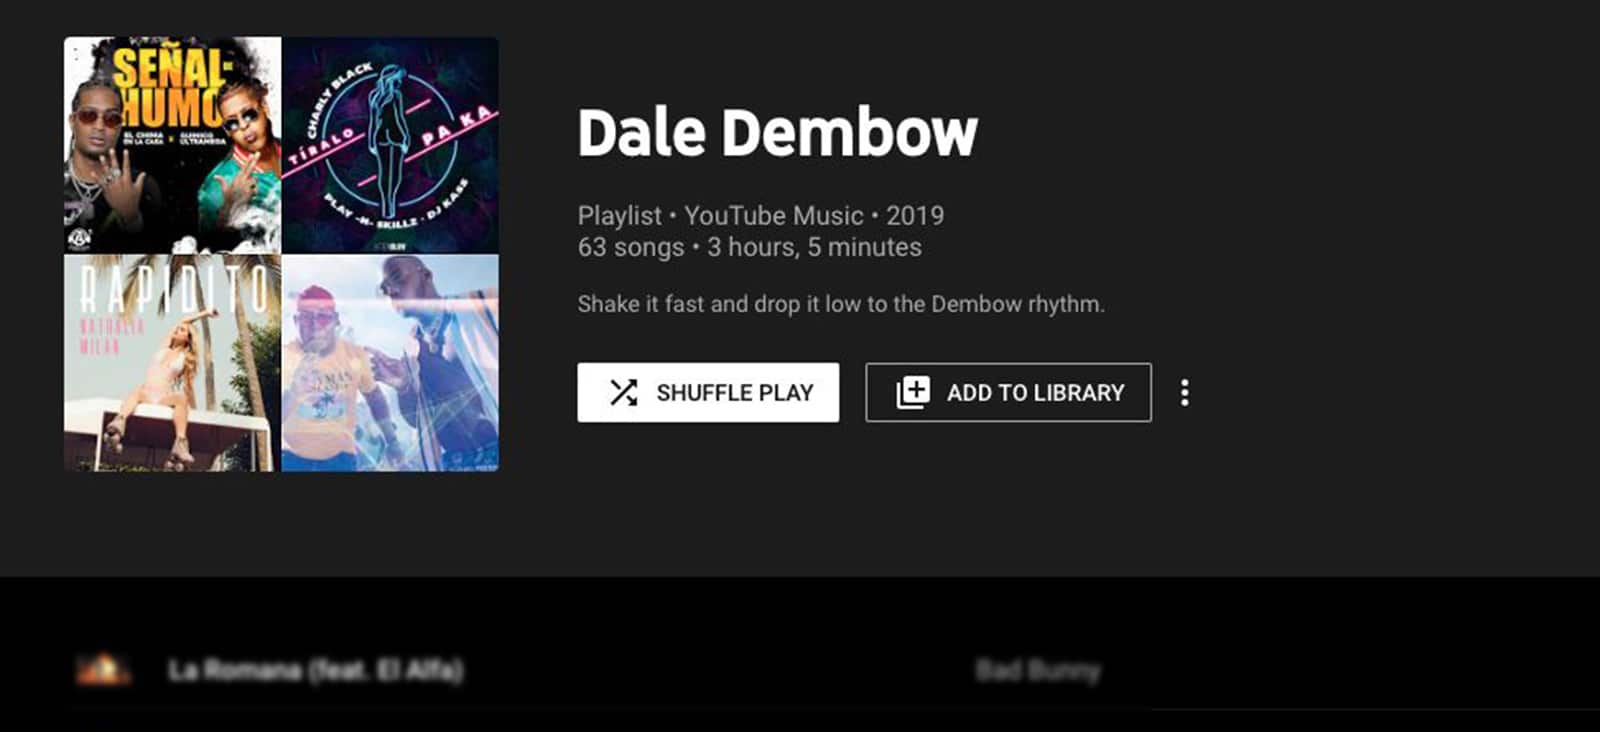 Dale Dembow playlist pitch